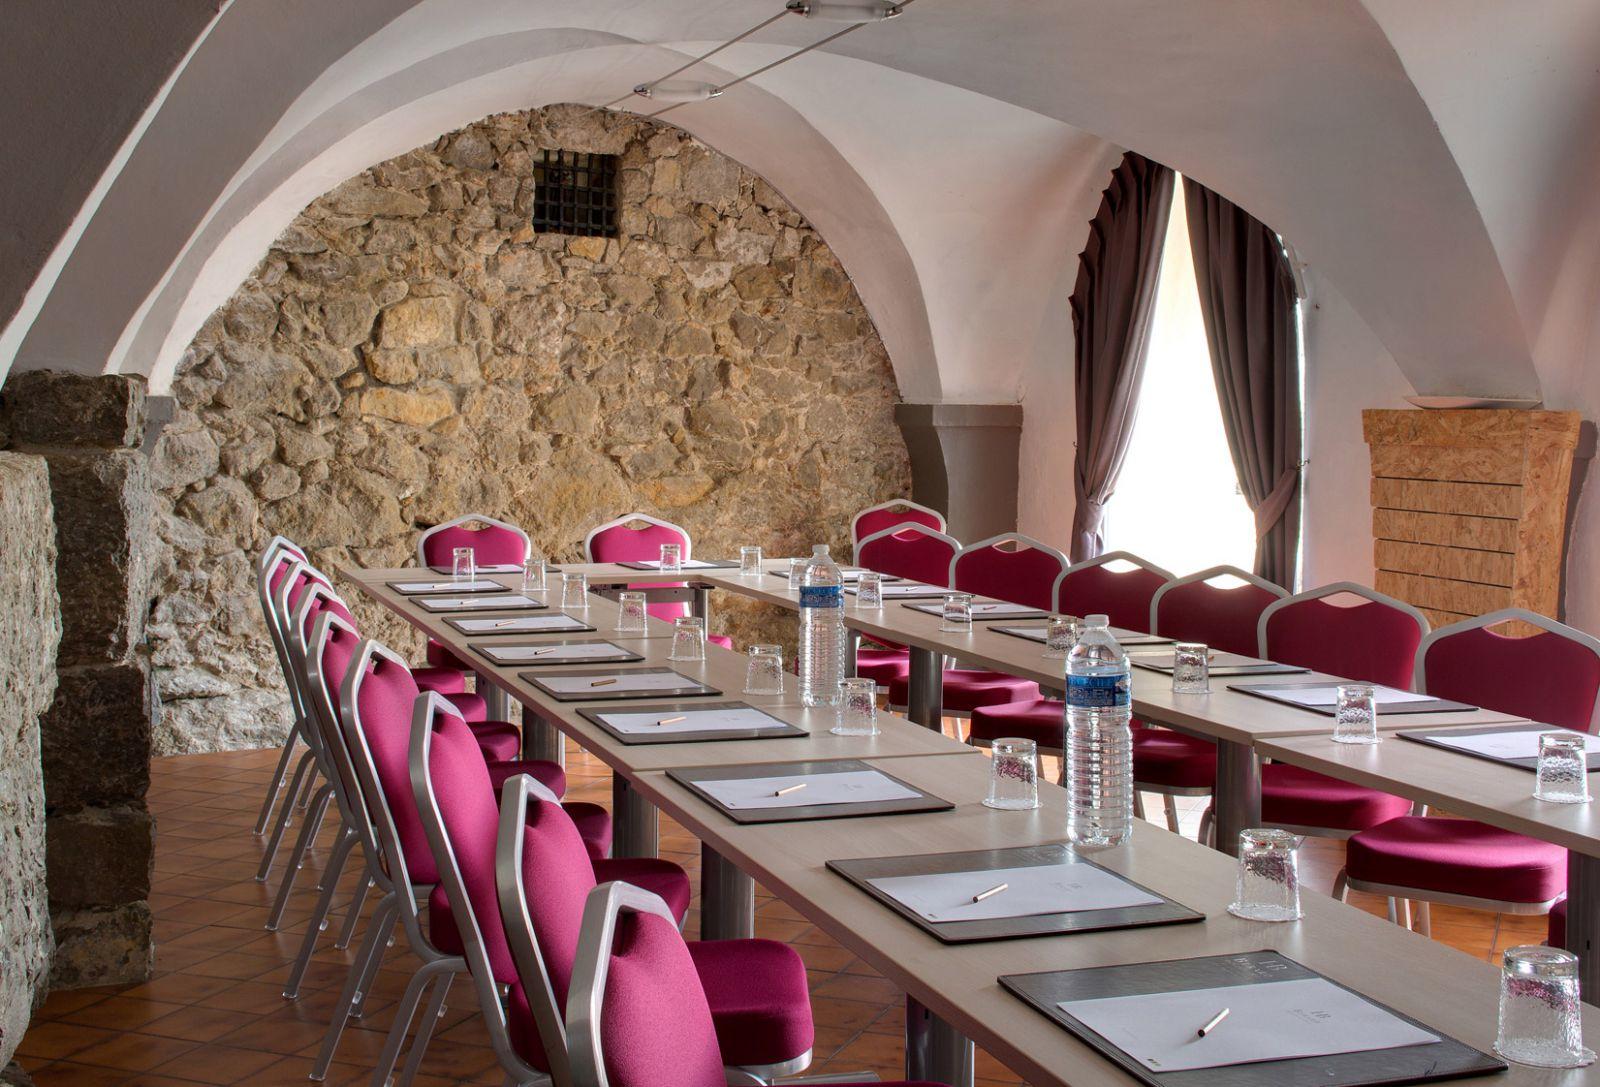 Hôtel Bérard & Spa - A 4 star hotel to organise a seminar in Provence